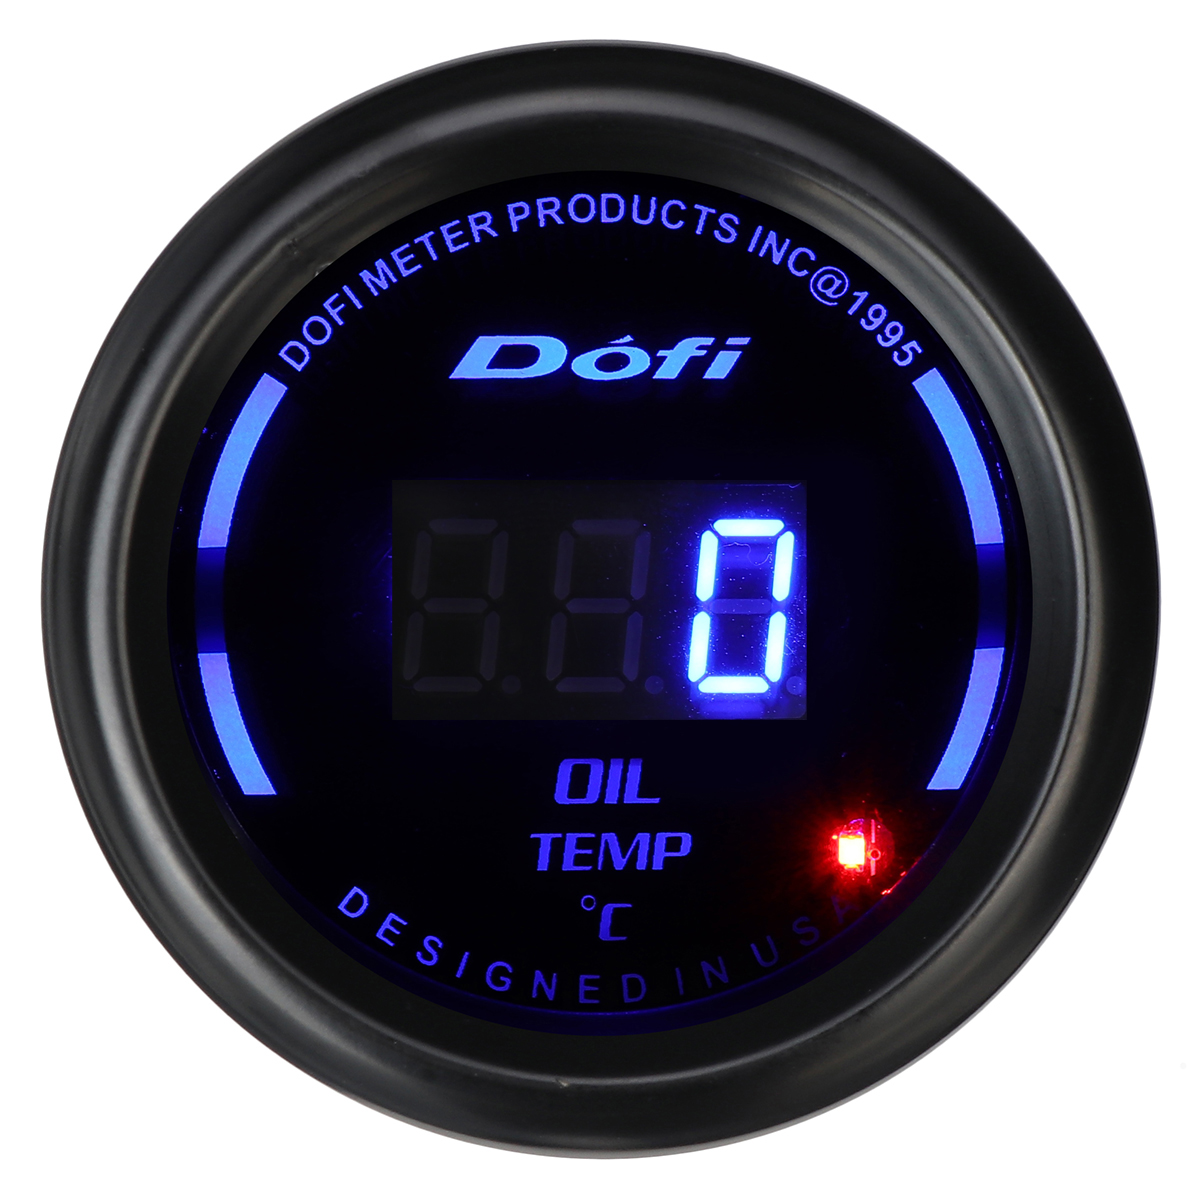 2" 52Mm LCD Digital Display Car Gauges Auto Oil Pressure Meter/Water Temperature Meter/Exhaust Temperature Meter/Volt Meter/Oil Temperature Meter/Tacho Meter - Auto GoShop